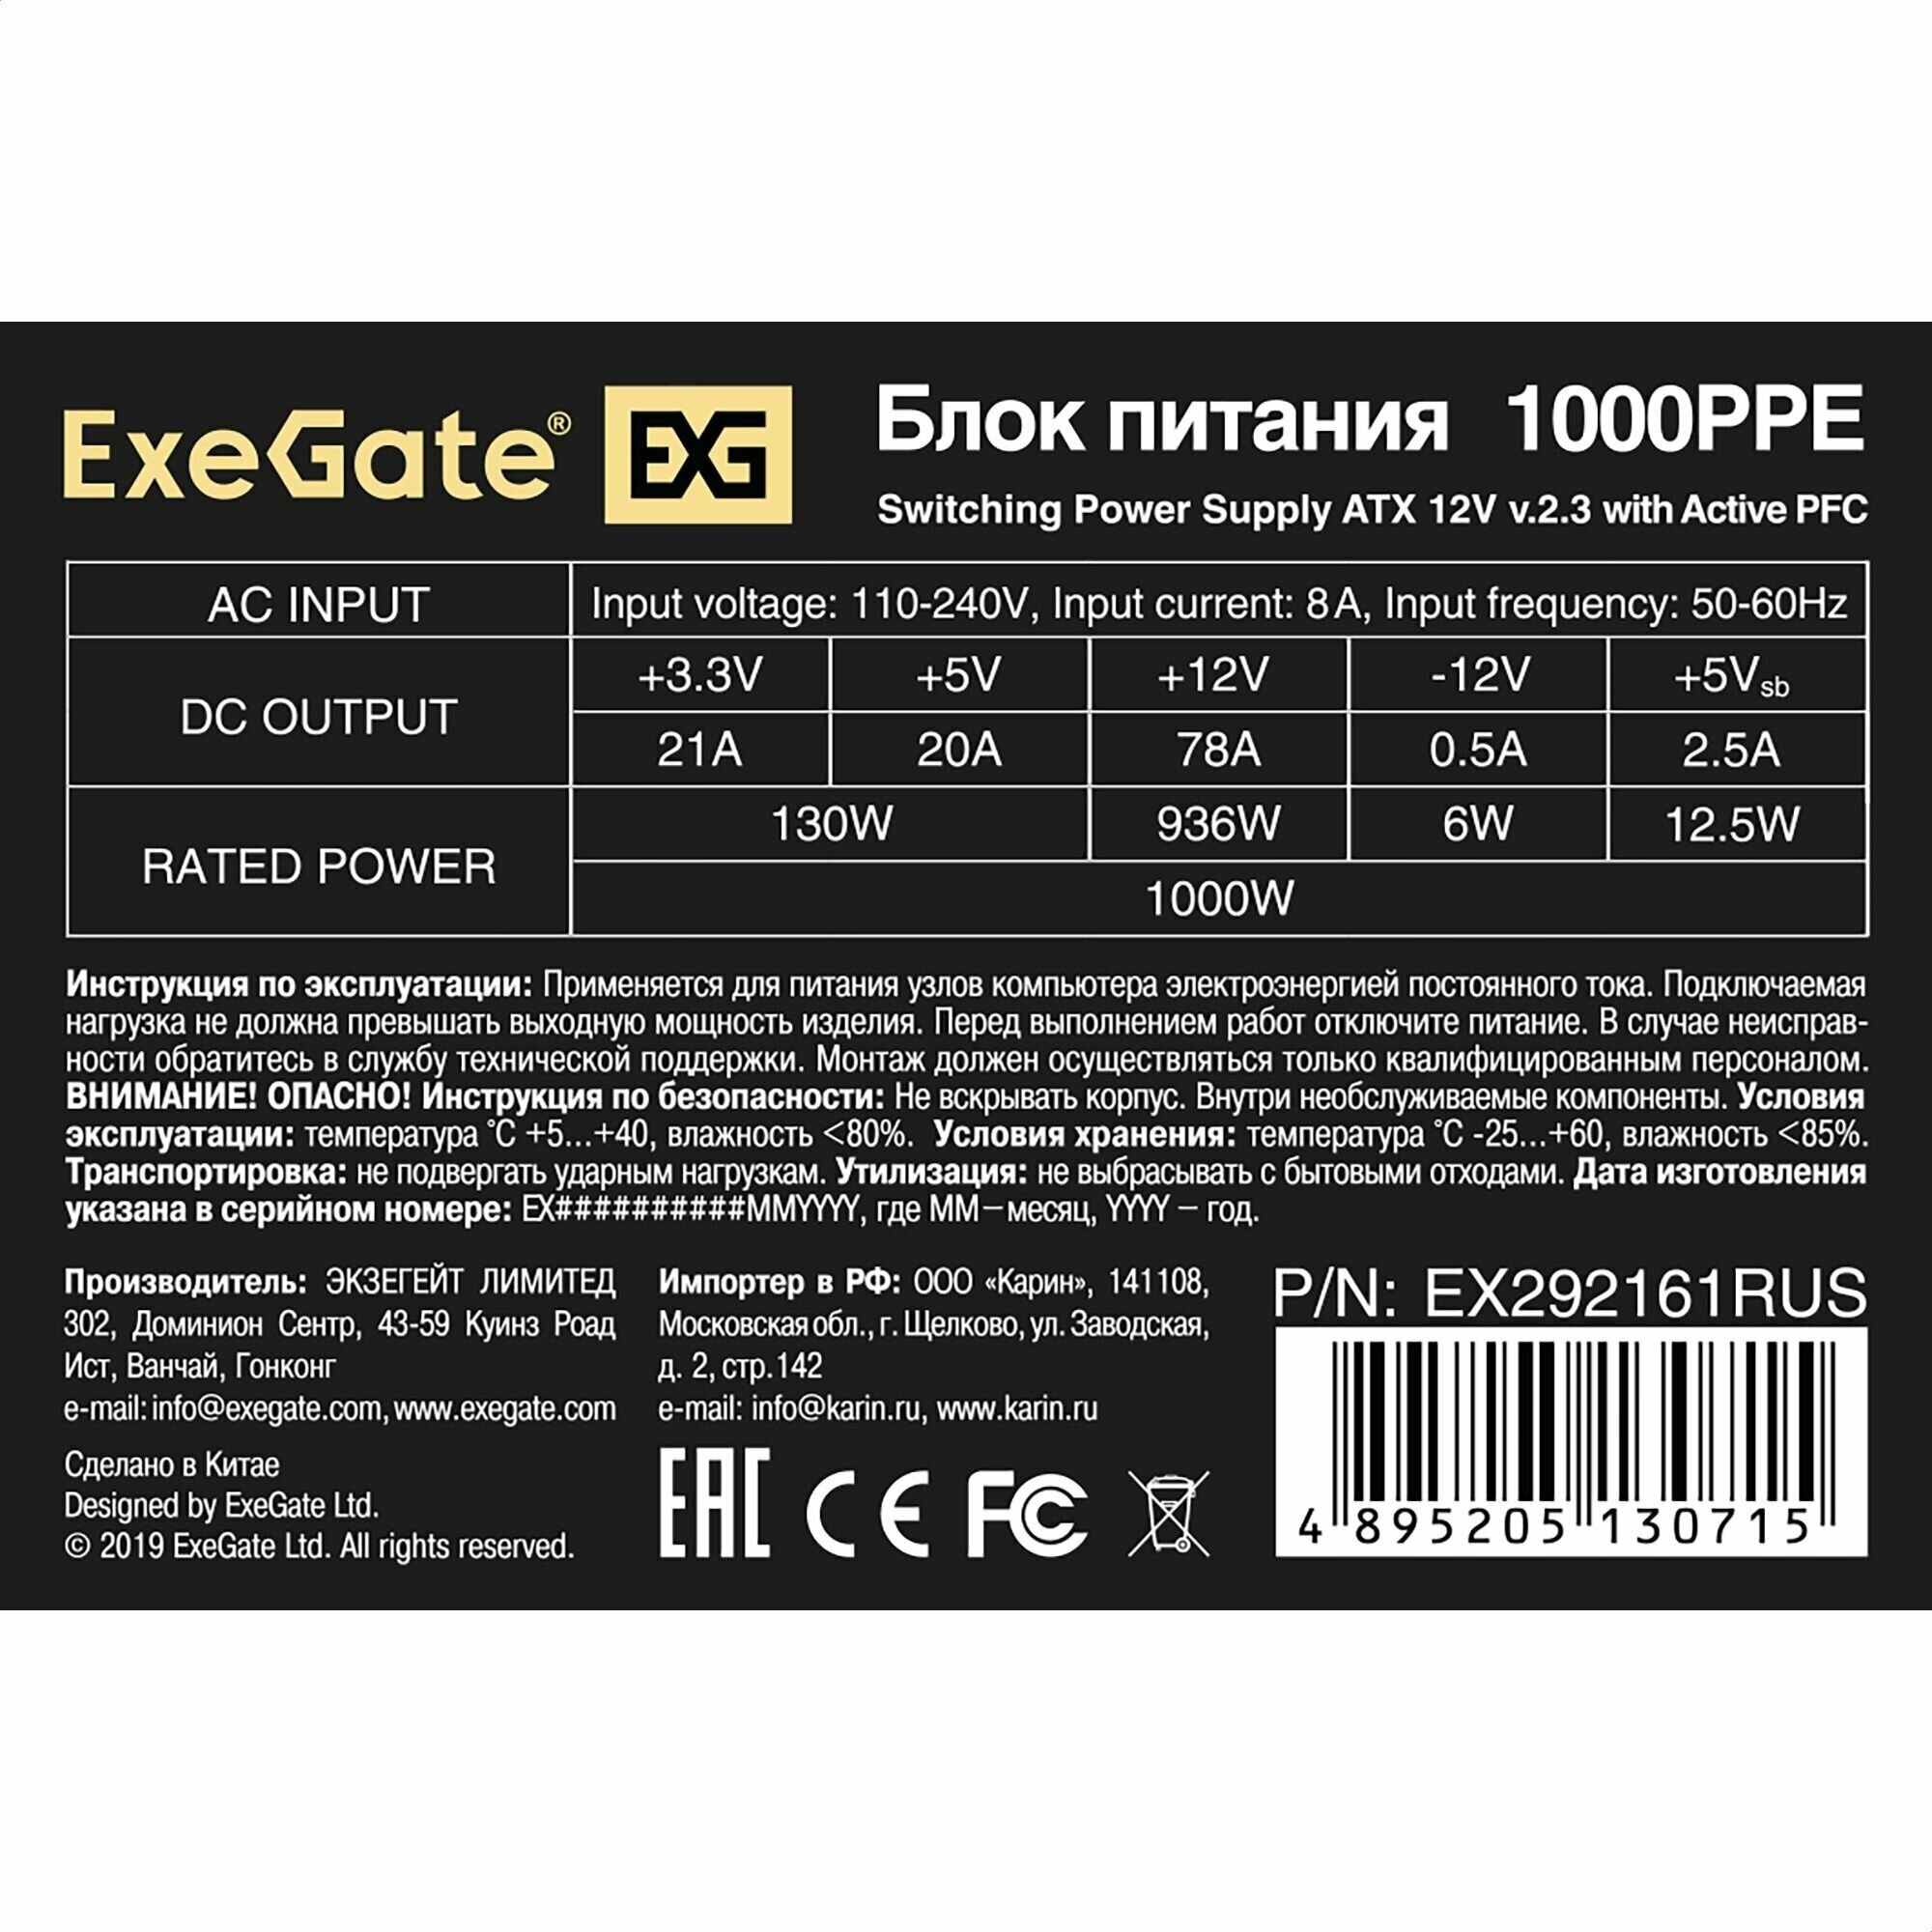 Блок питания Exegate 1000PPE 1000W ATX EX292161RUS OEM